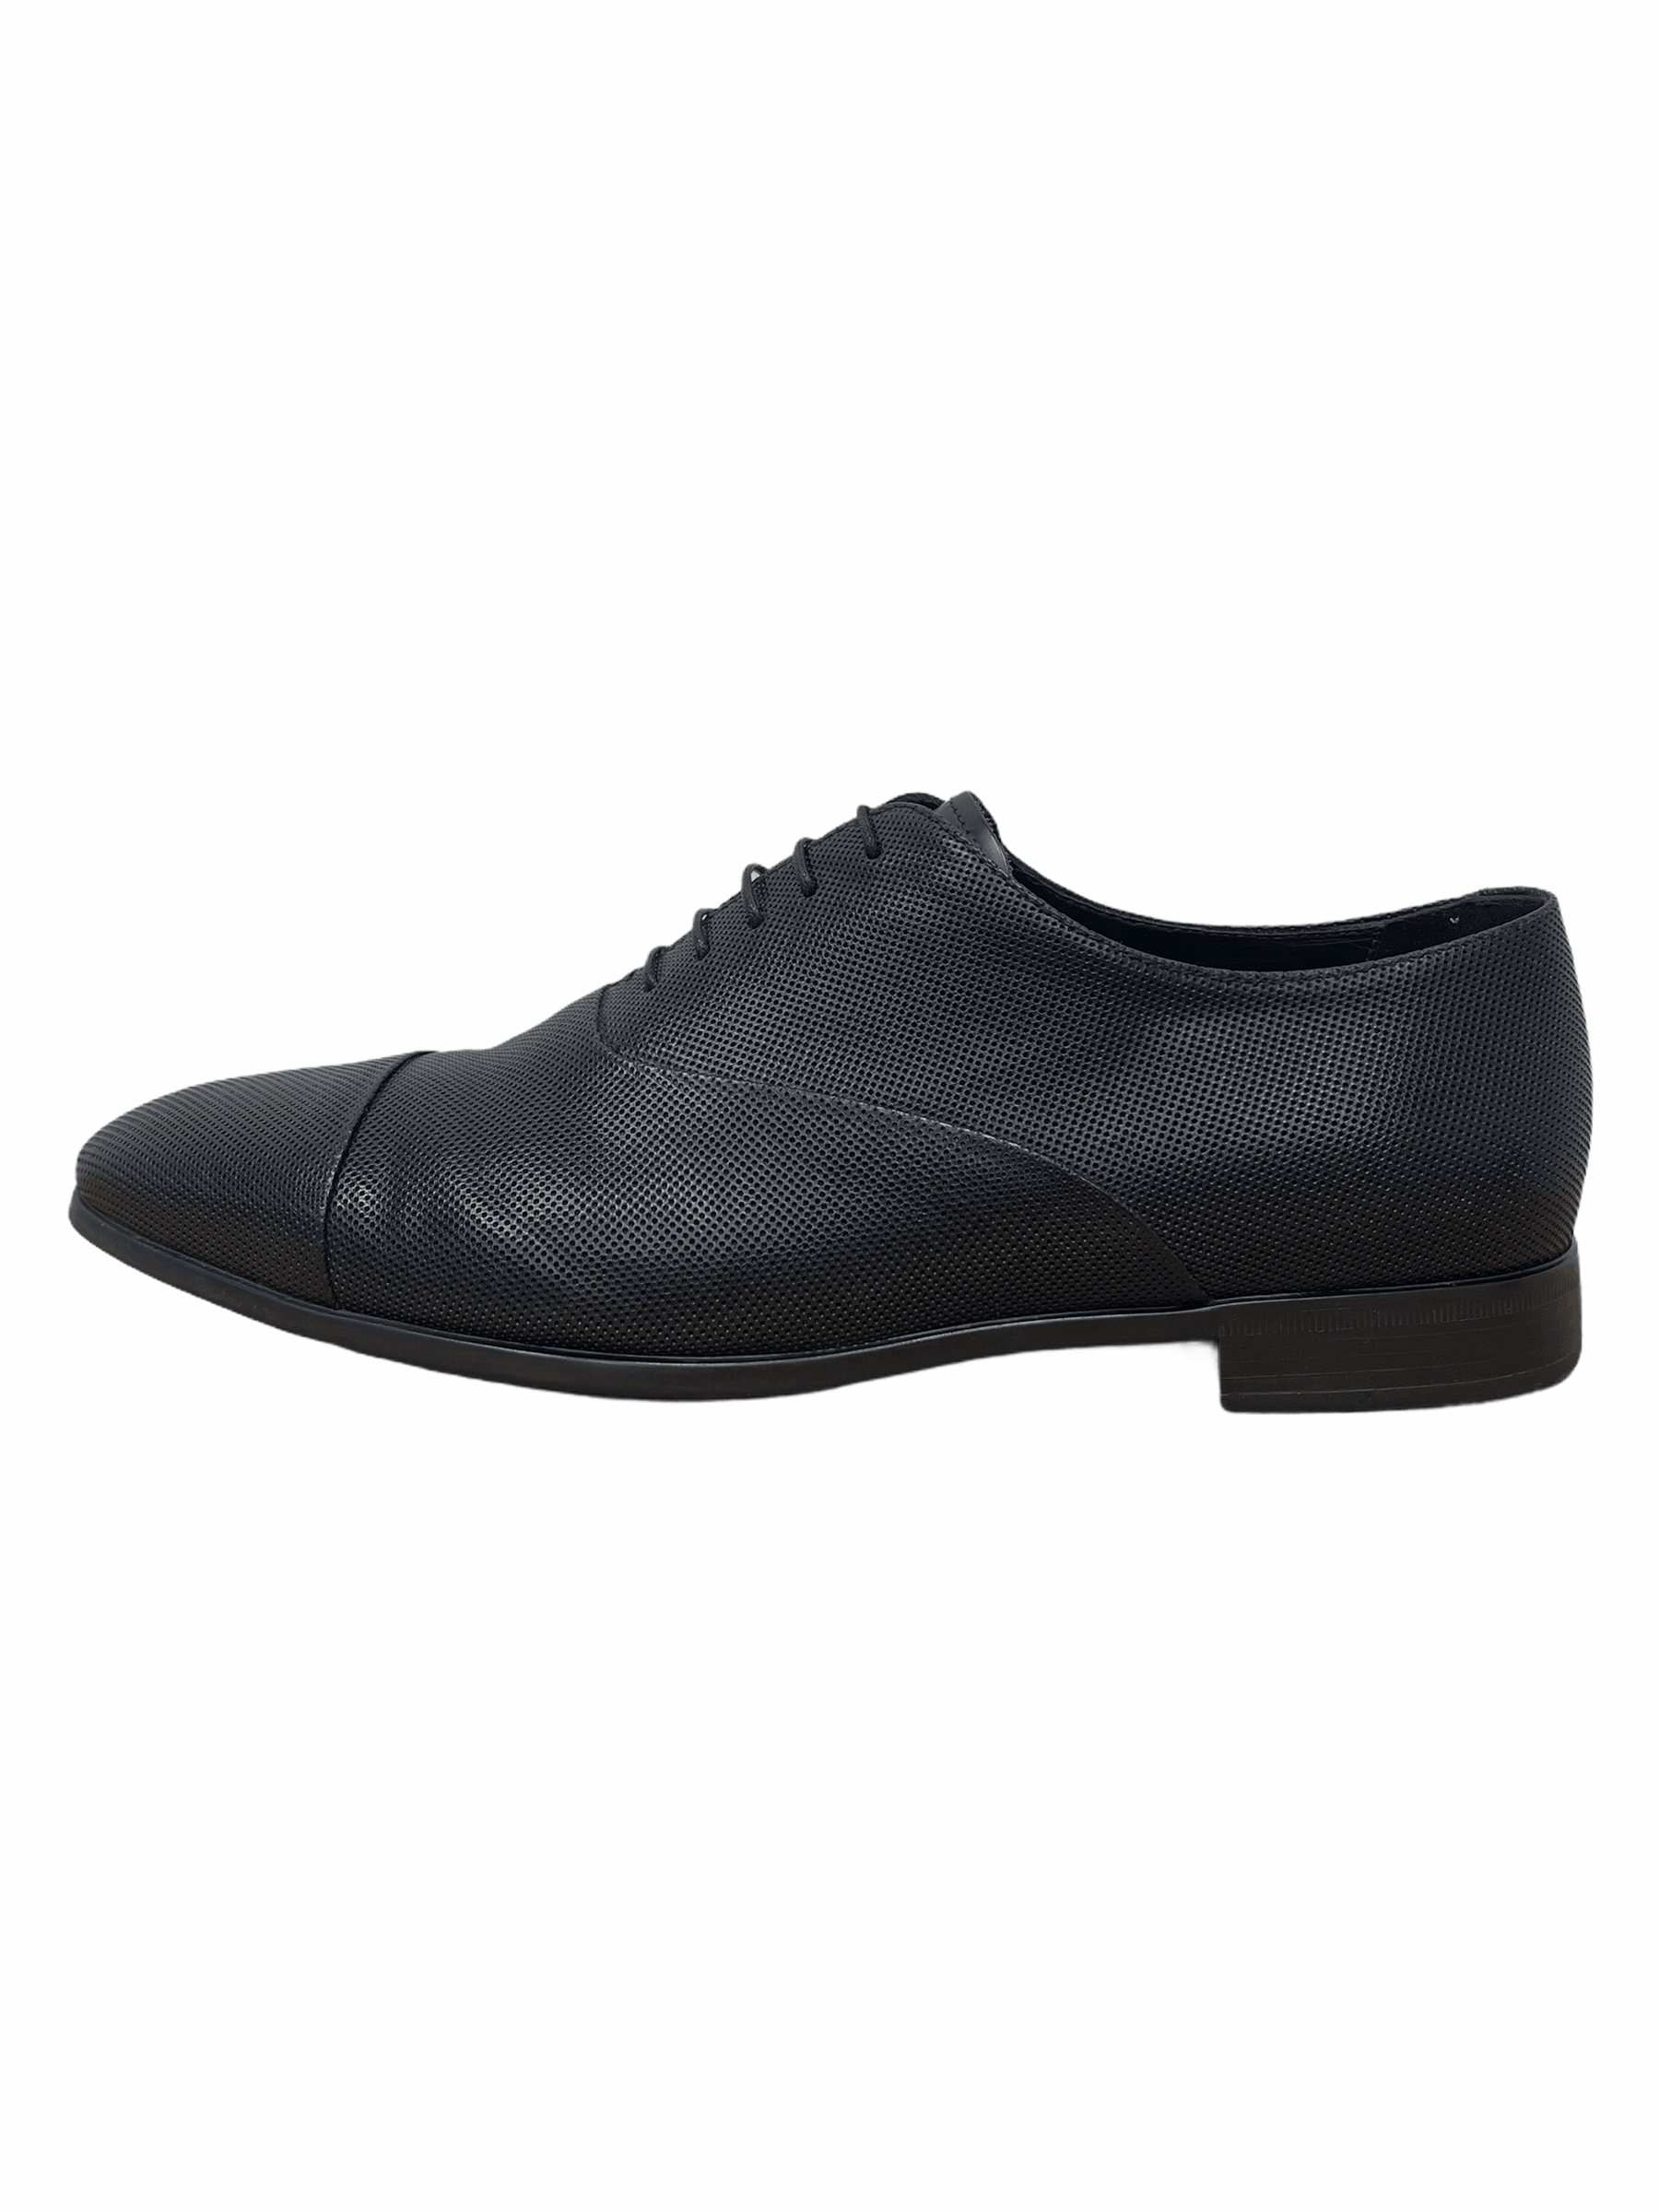 Giorgio Armani Black Leather Cap Toe Oxford Dress Shoes 10D – Genuine  Design Luxury Consignment